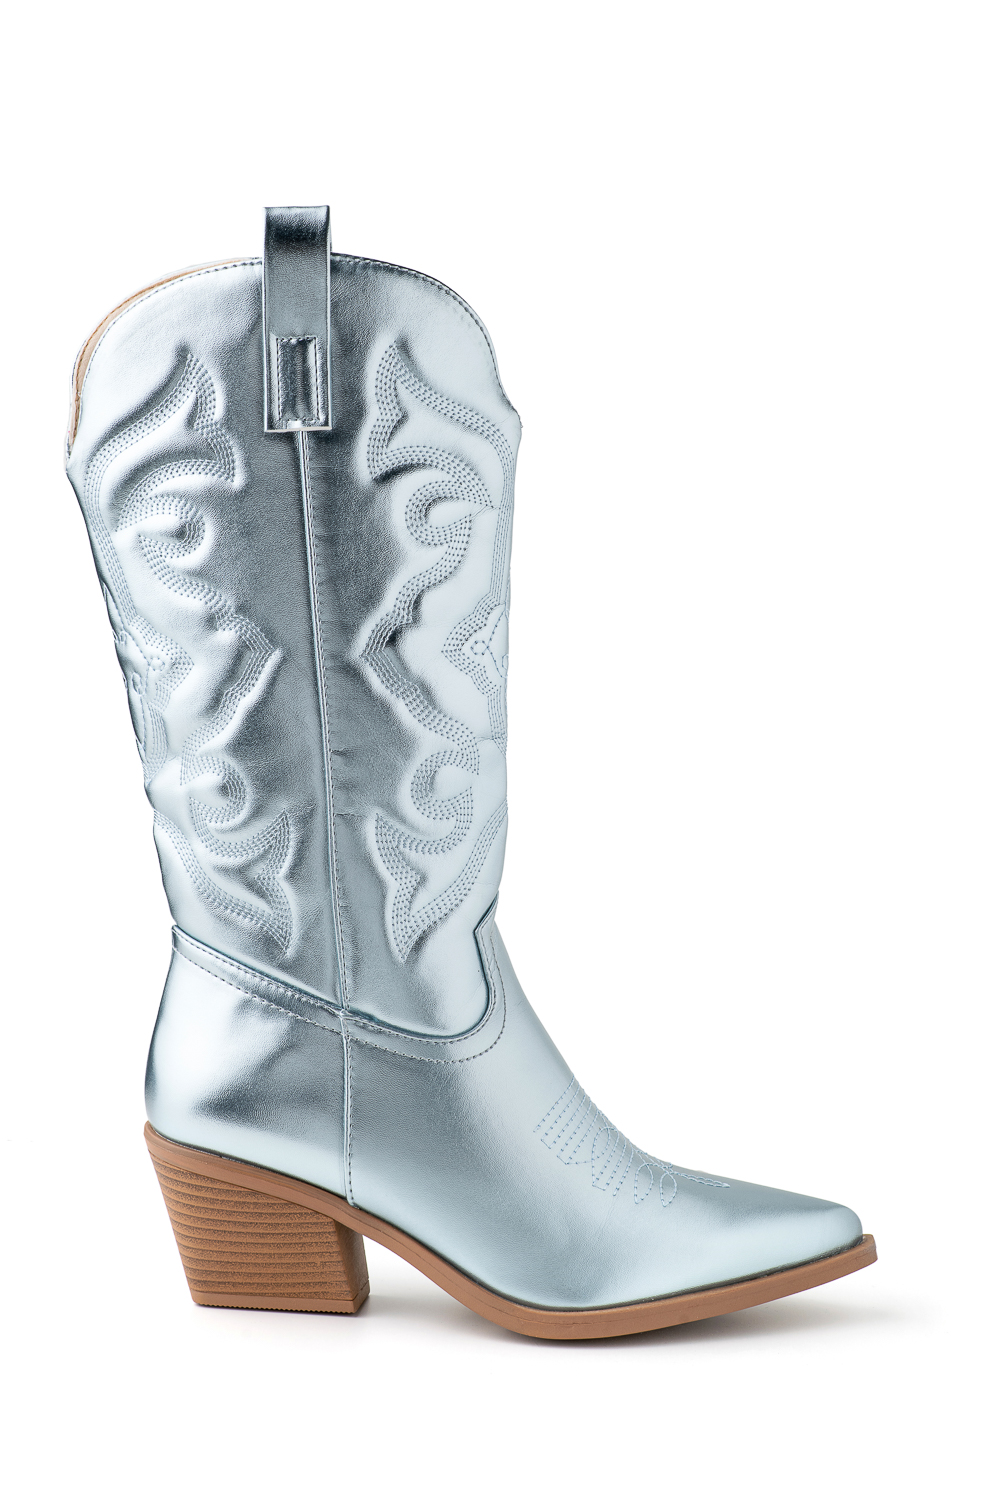 Metallic Blue Cowboy Boots